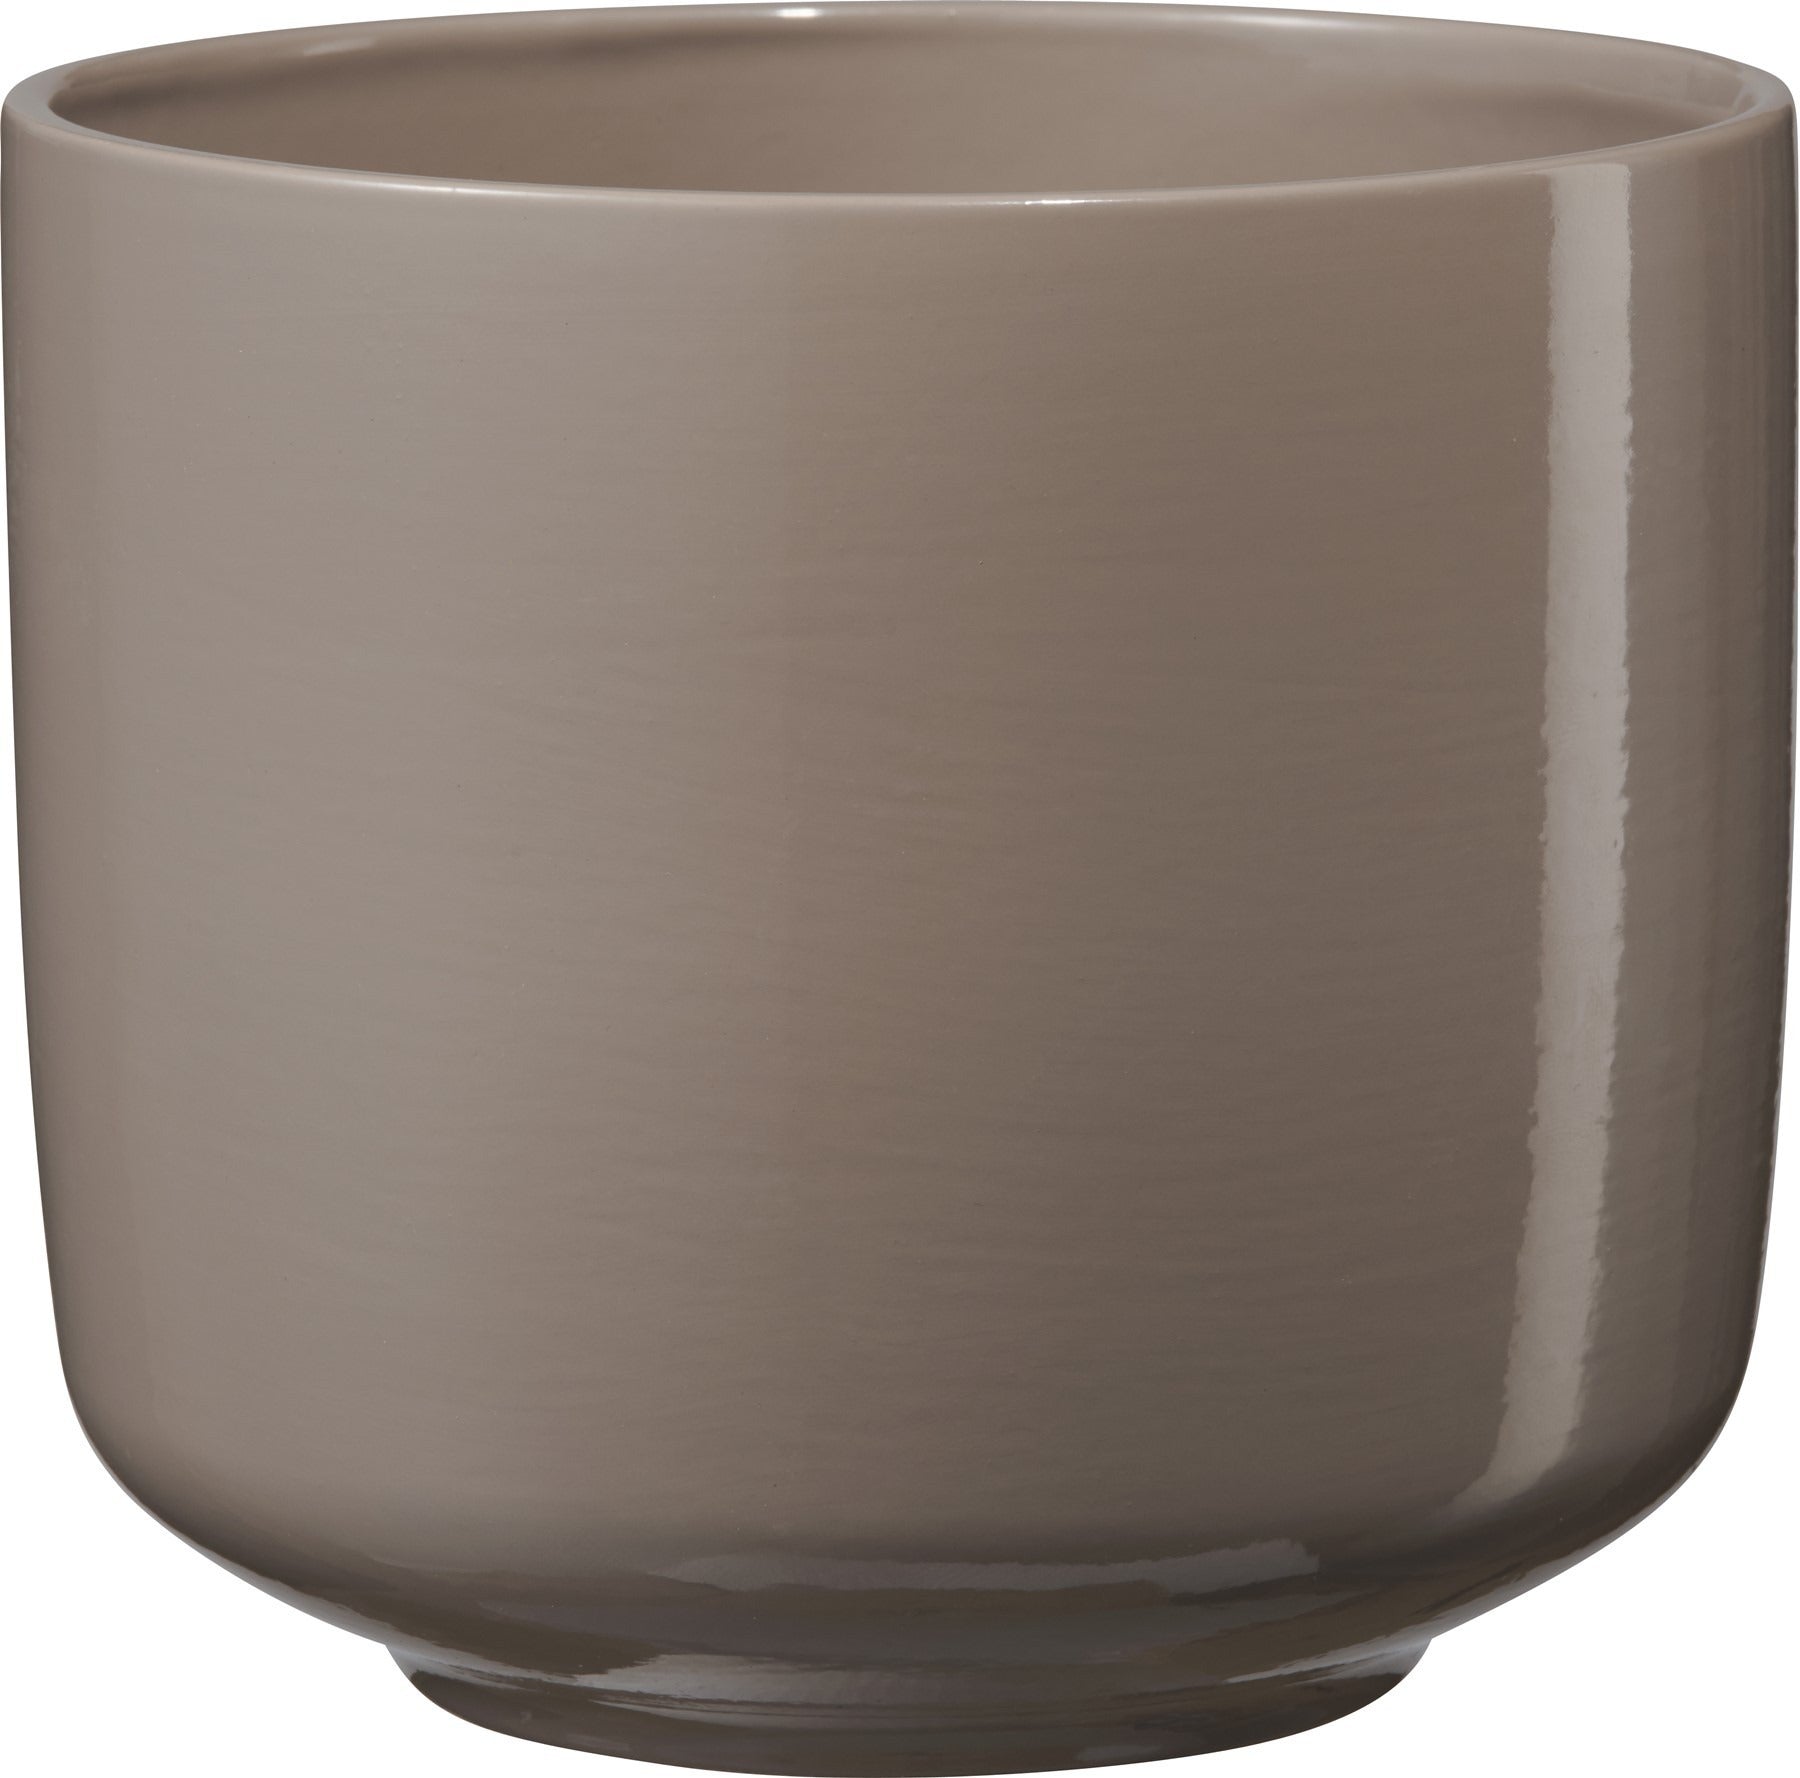 View Bari Ceramic Pot GreyBeige 16cm x 14cm information